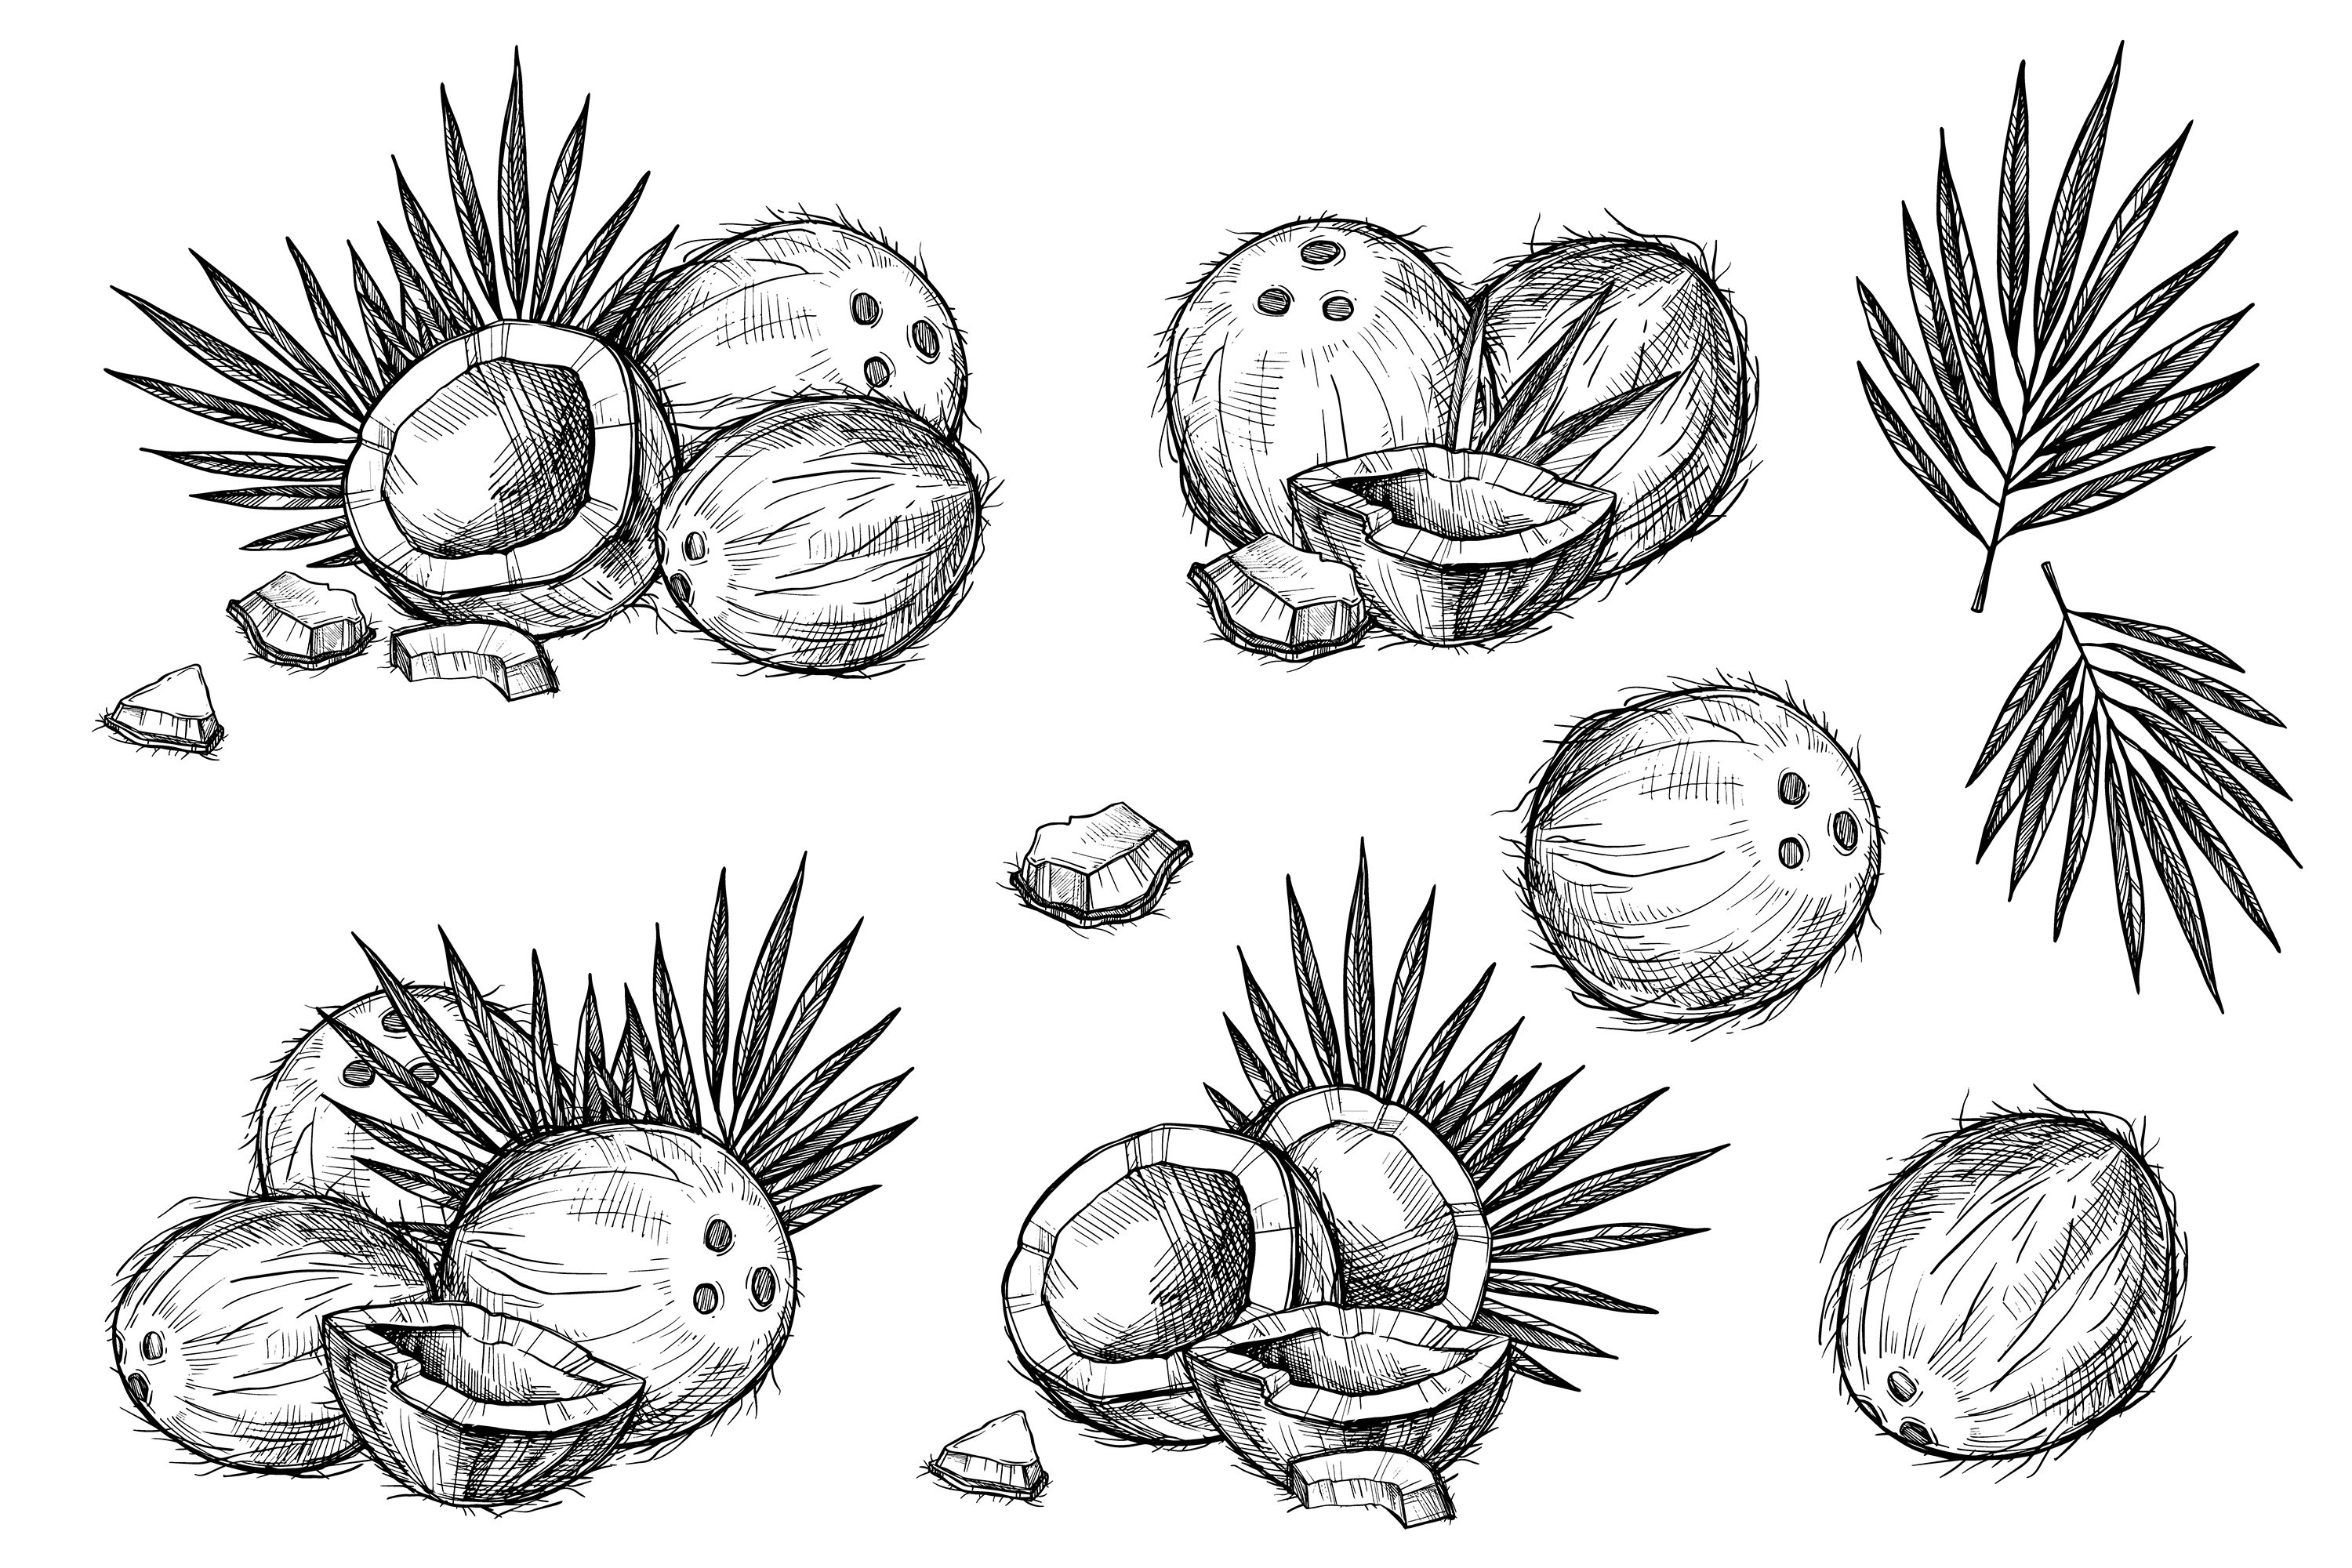 Hand drawn coconut illustrations.